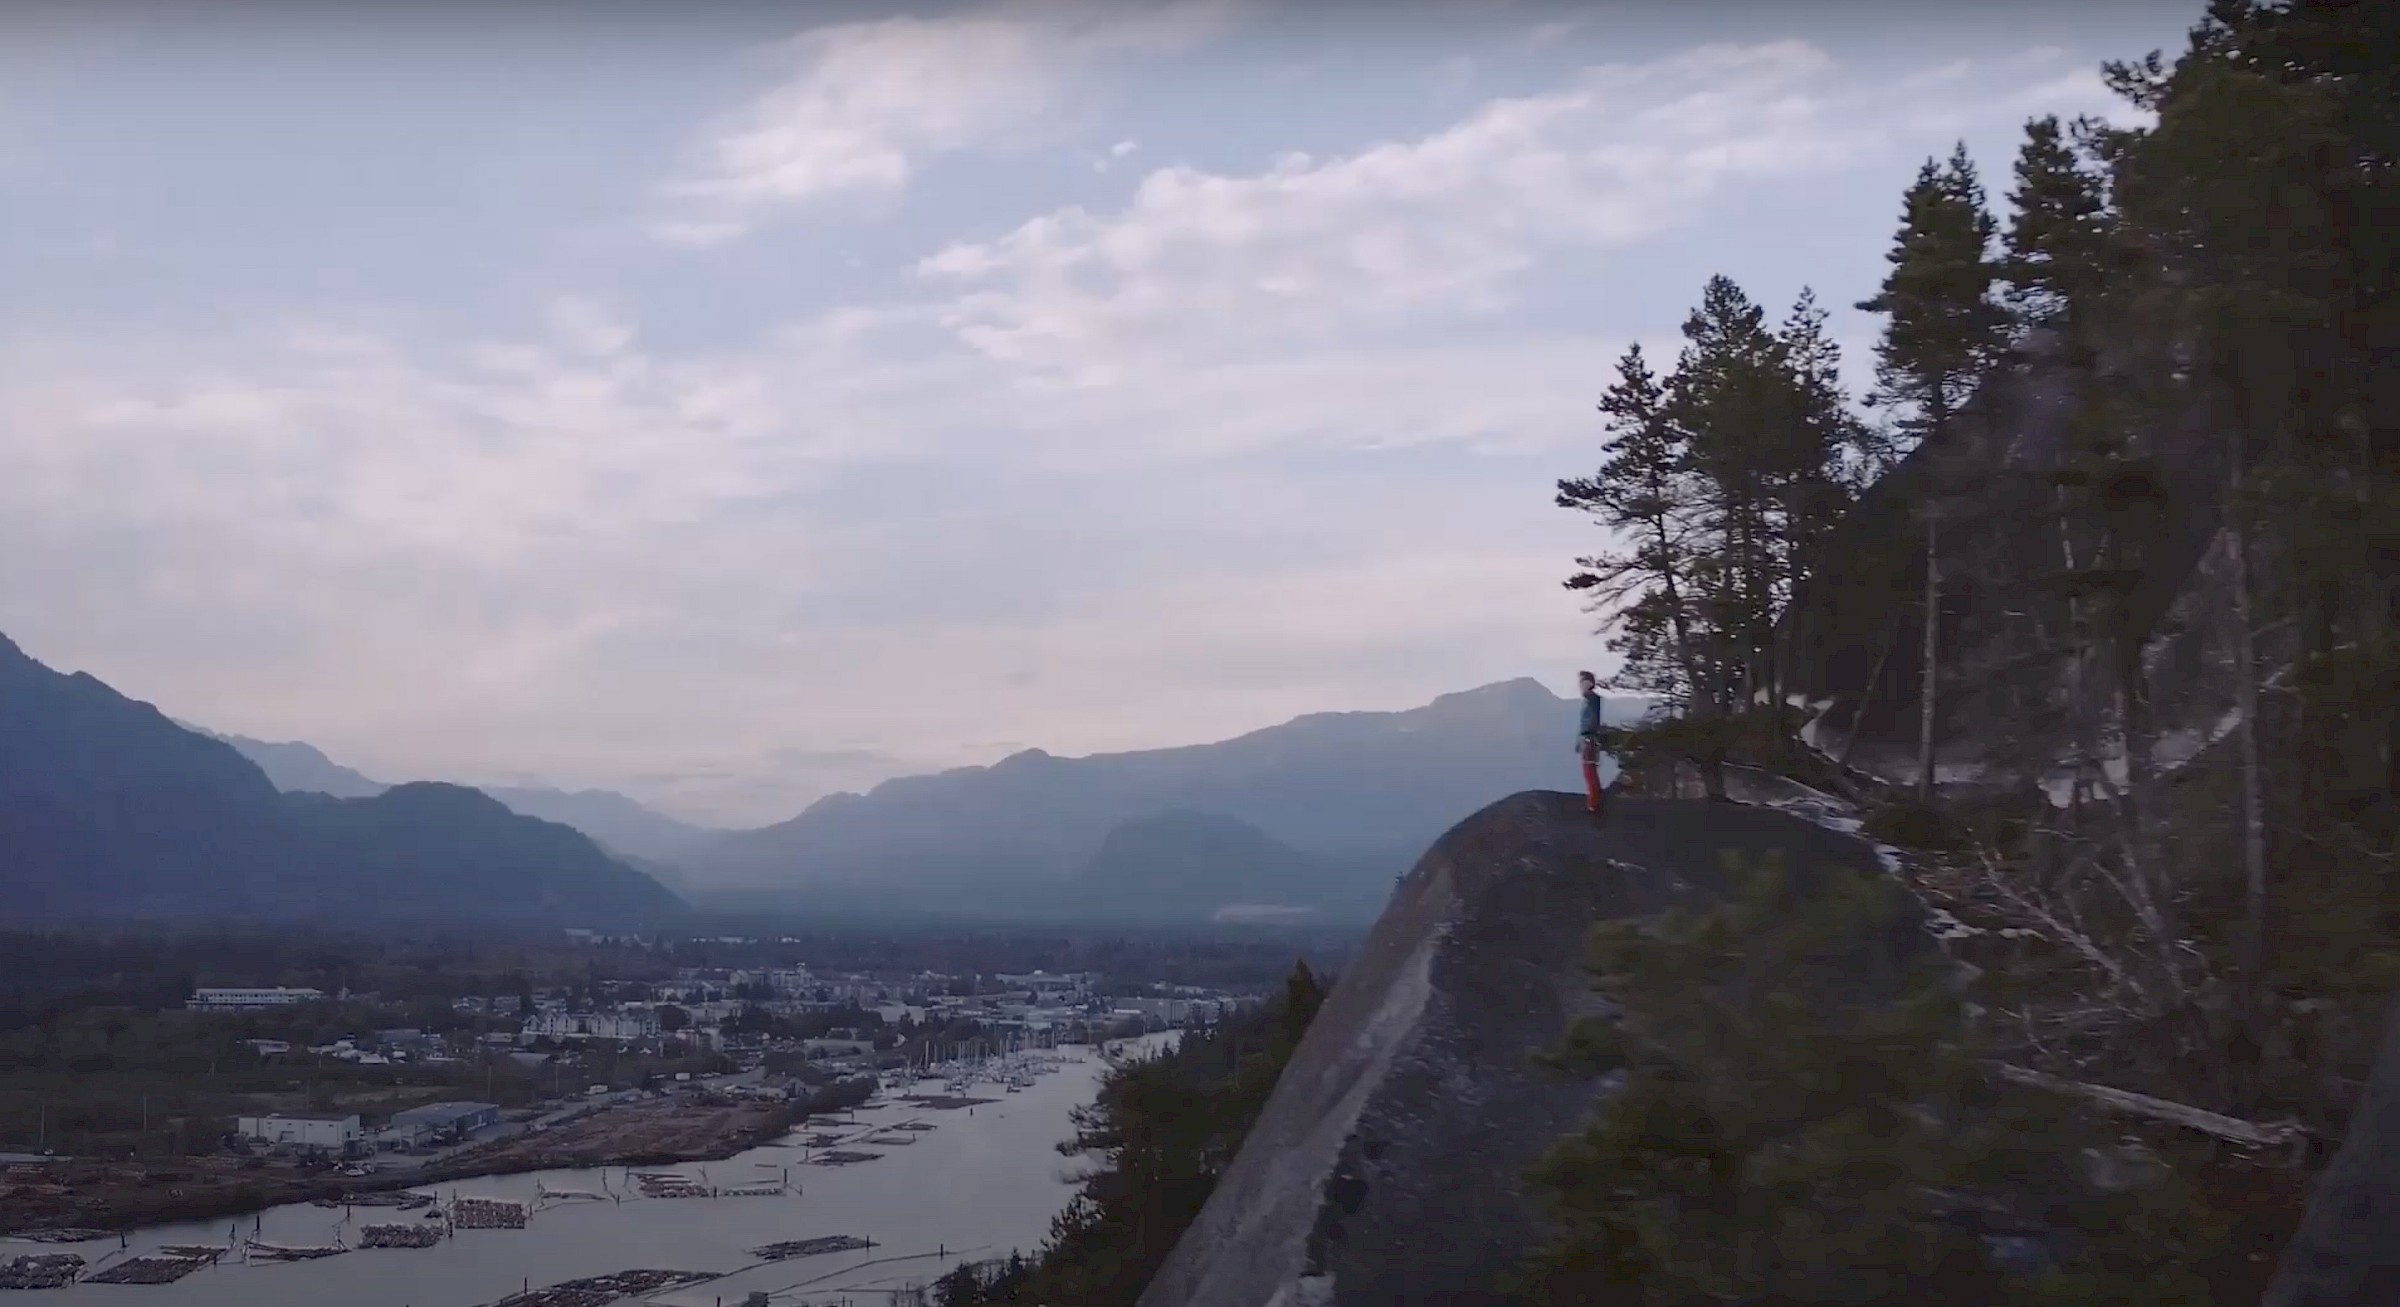 Climber overlooking Squamish